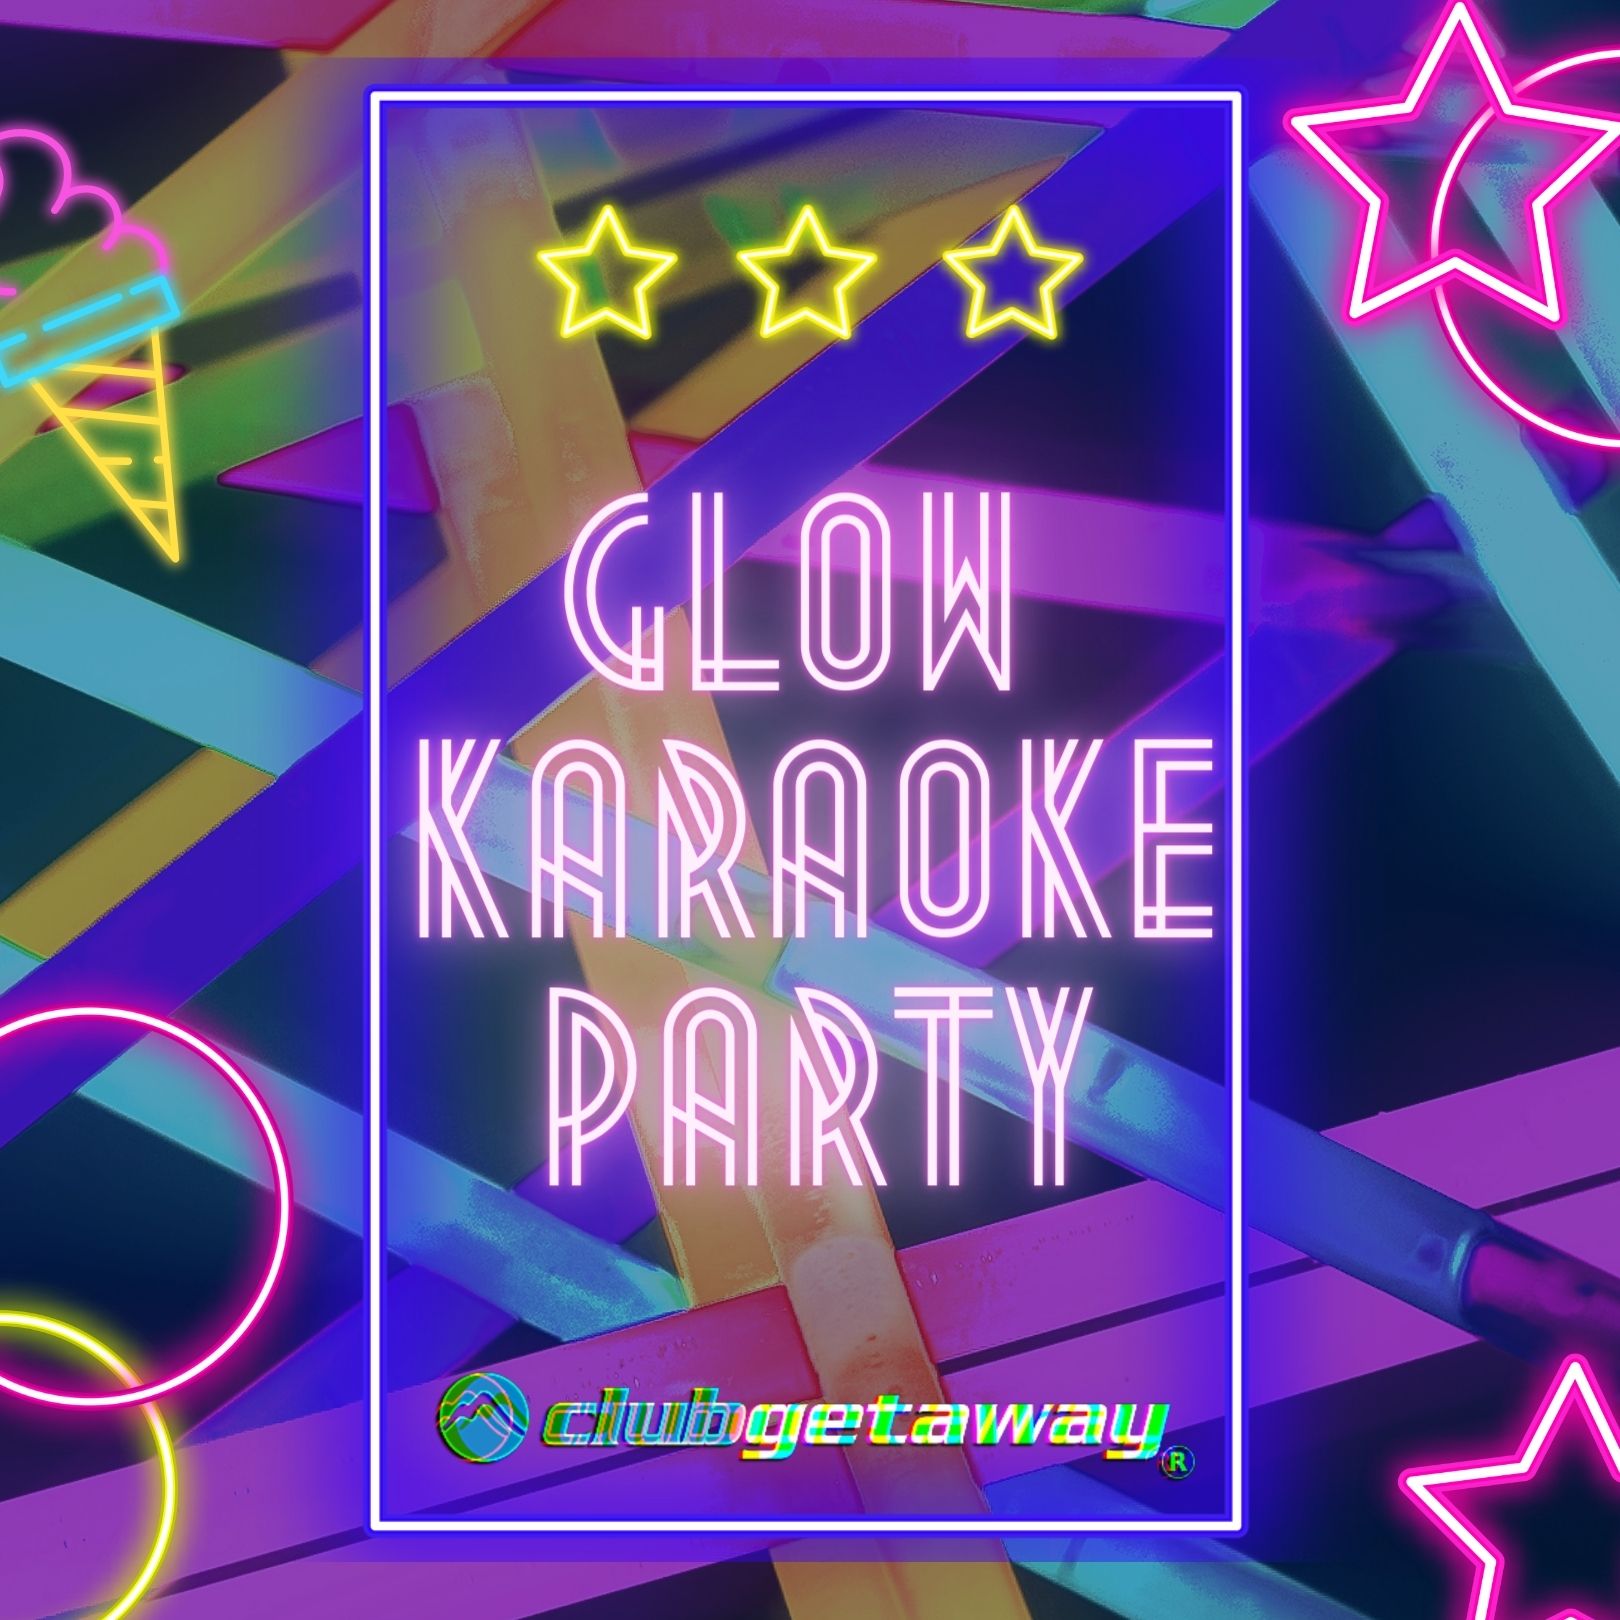 Karaoke Party At Club Getaway